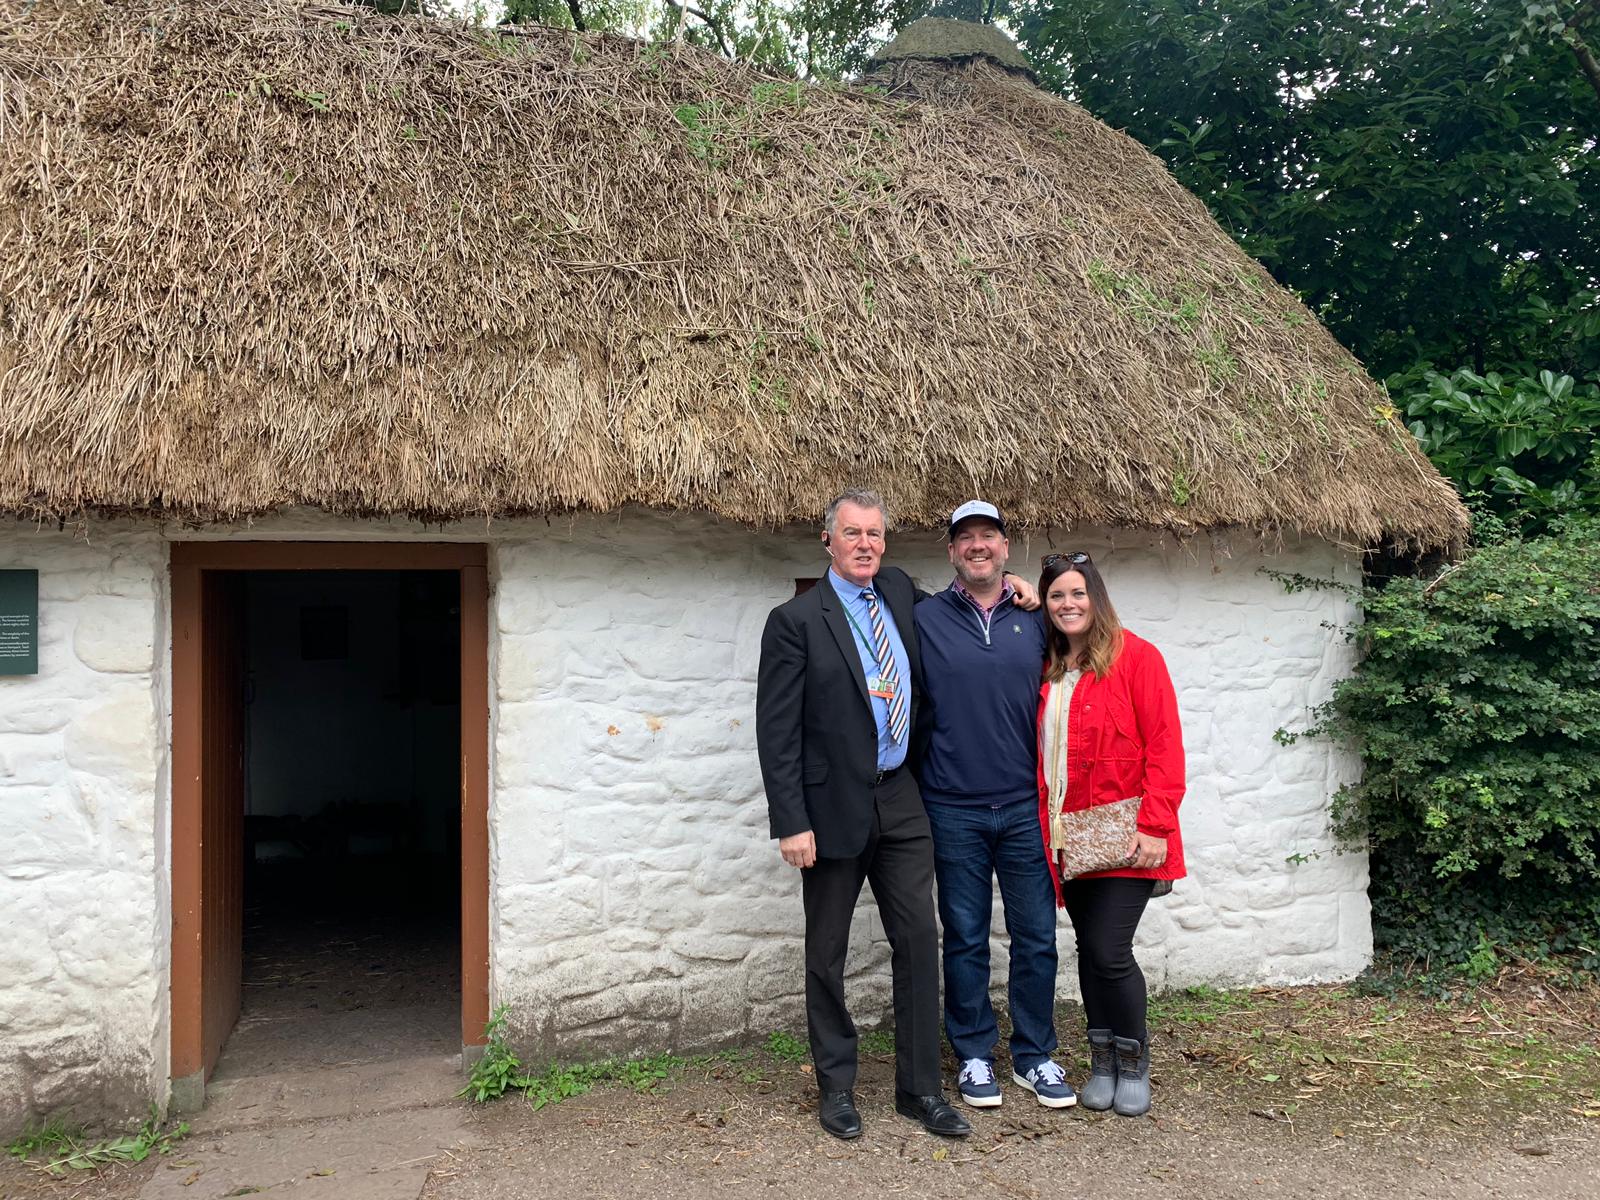 A real Irish Cottage